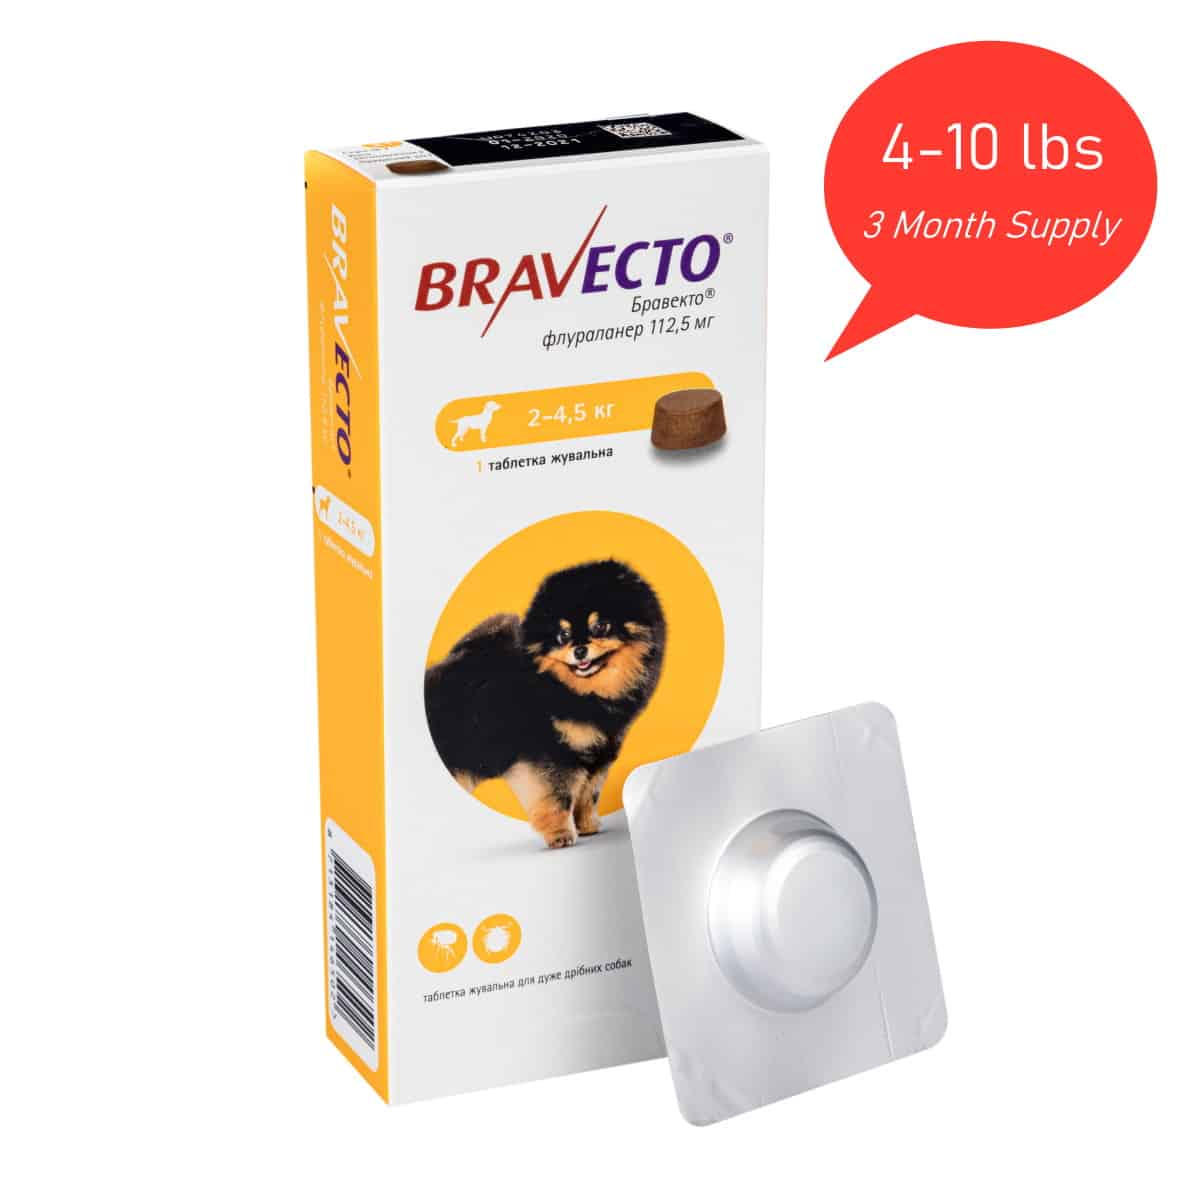 https://homelabvet.com/wp-content/uploads/2020/04/Bravecto-Chews-for-Dogs-4-10-lbs-image.jpg